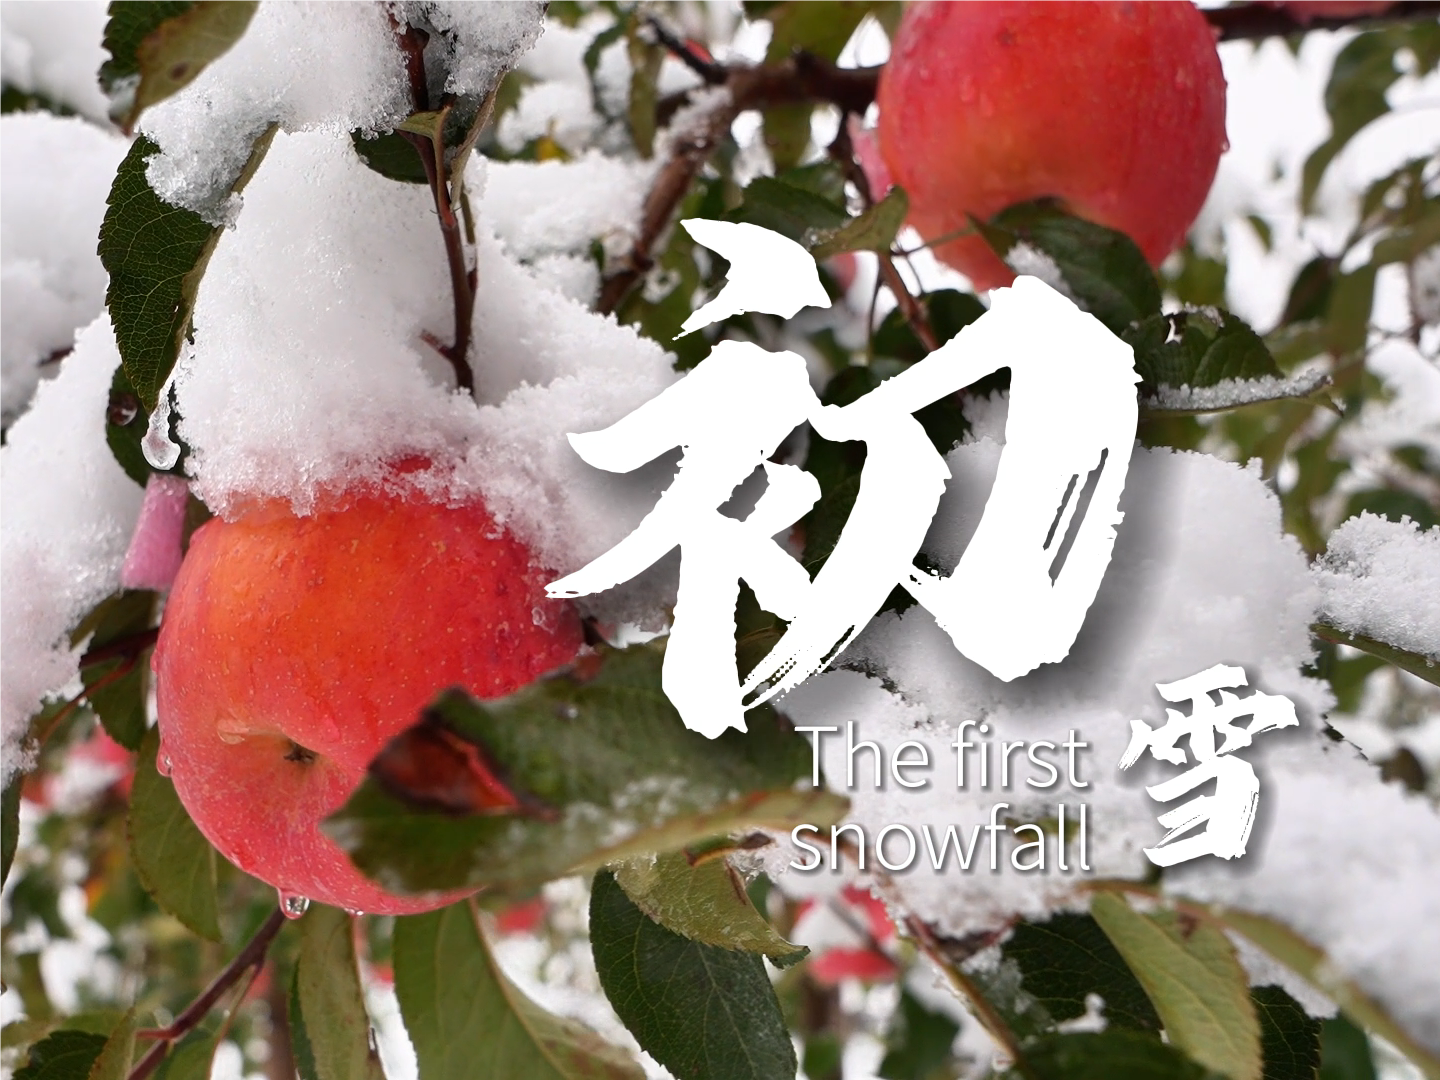 Yantai's snowy apple orchard shines in winter